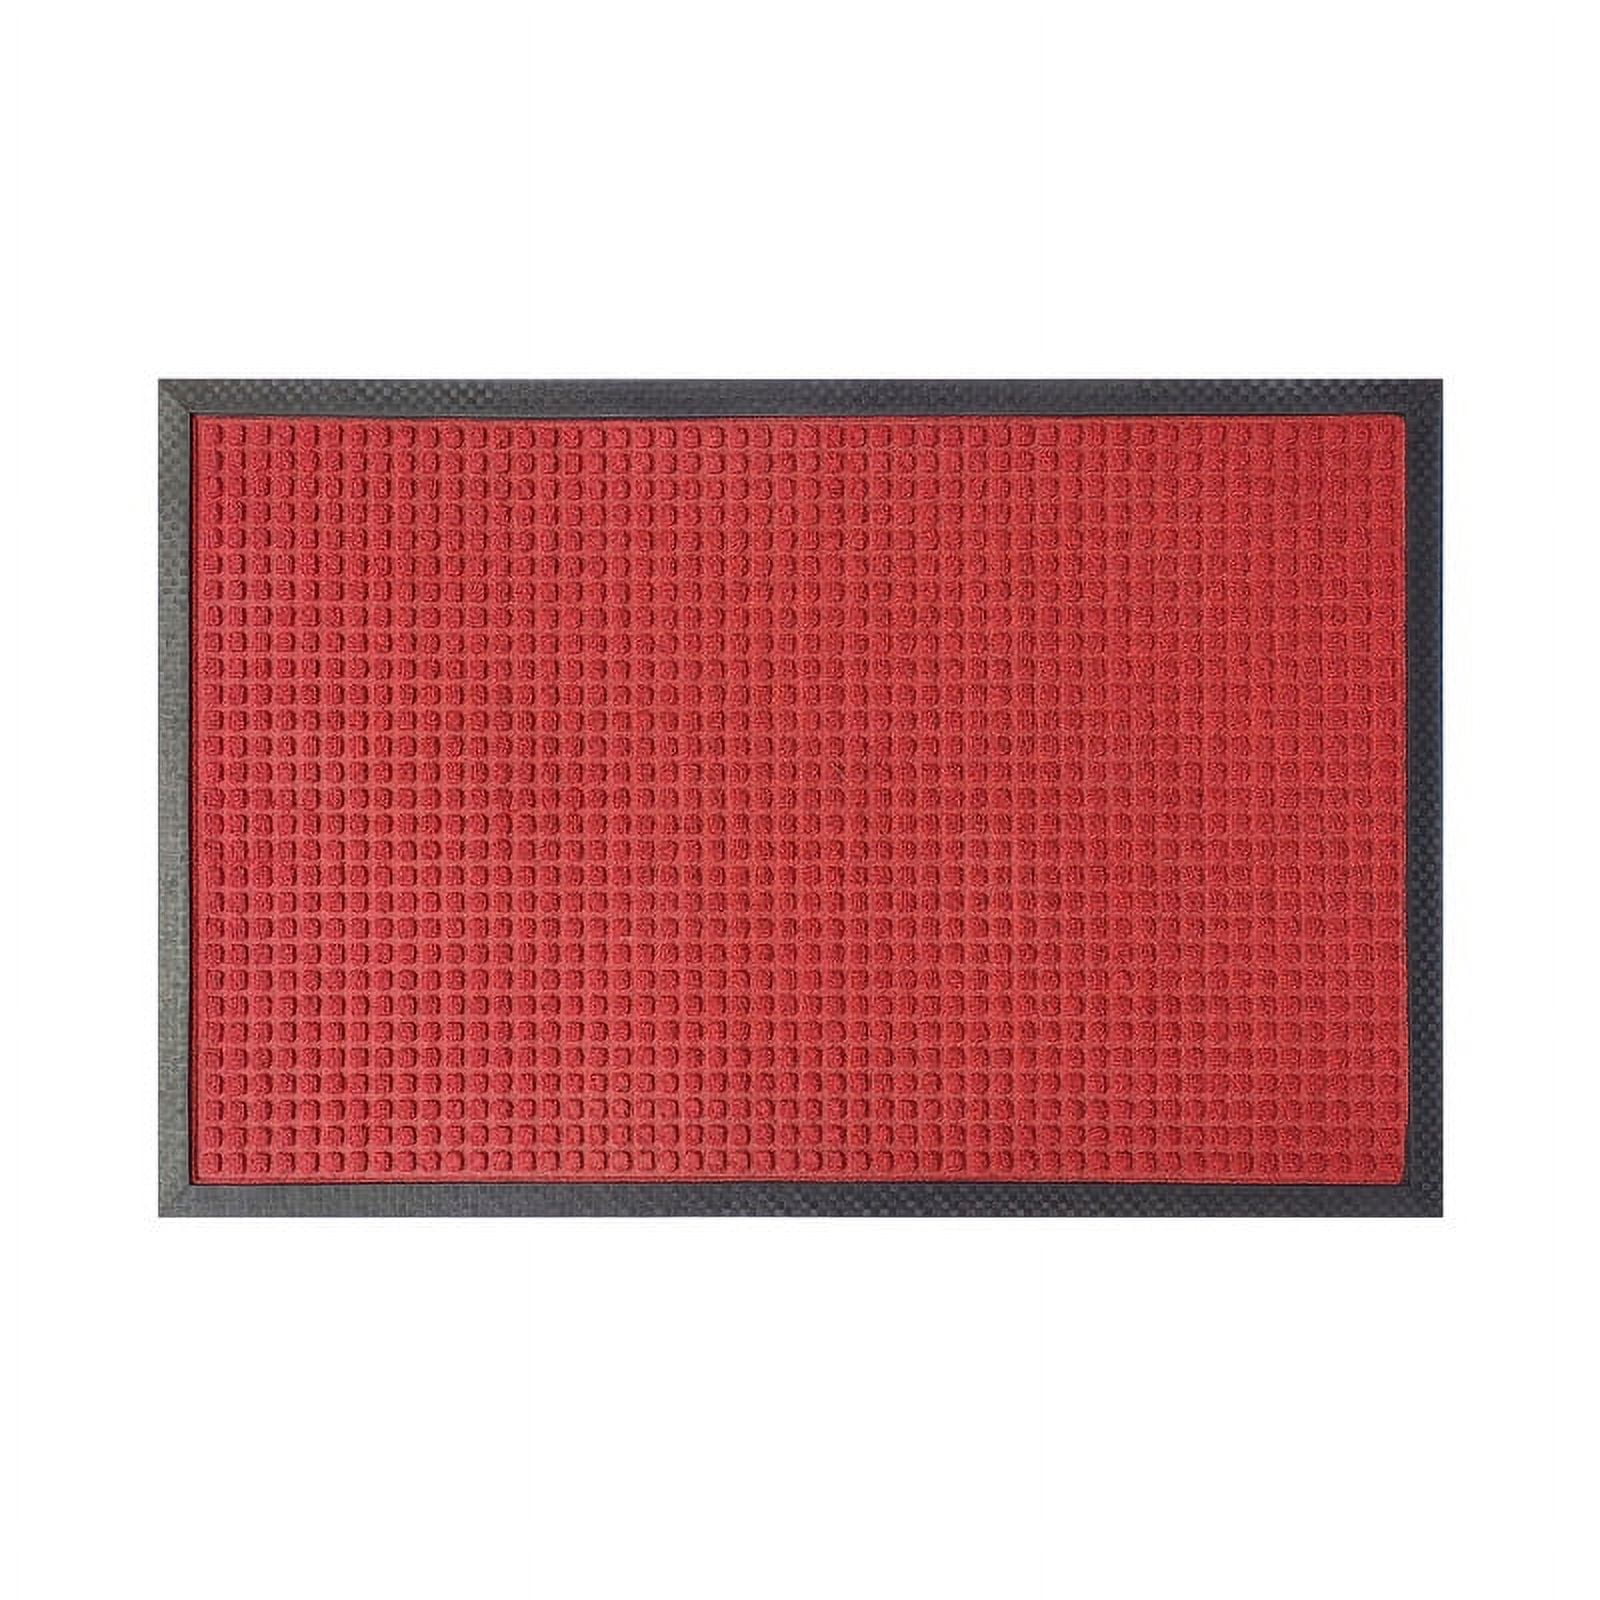 A1HC NewDurable & Versatile PolypropyleneRubber Doormat All